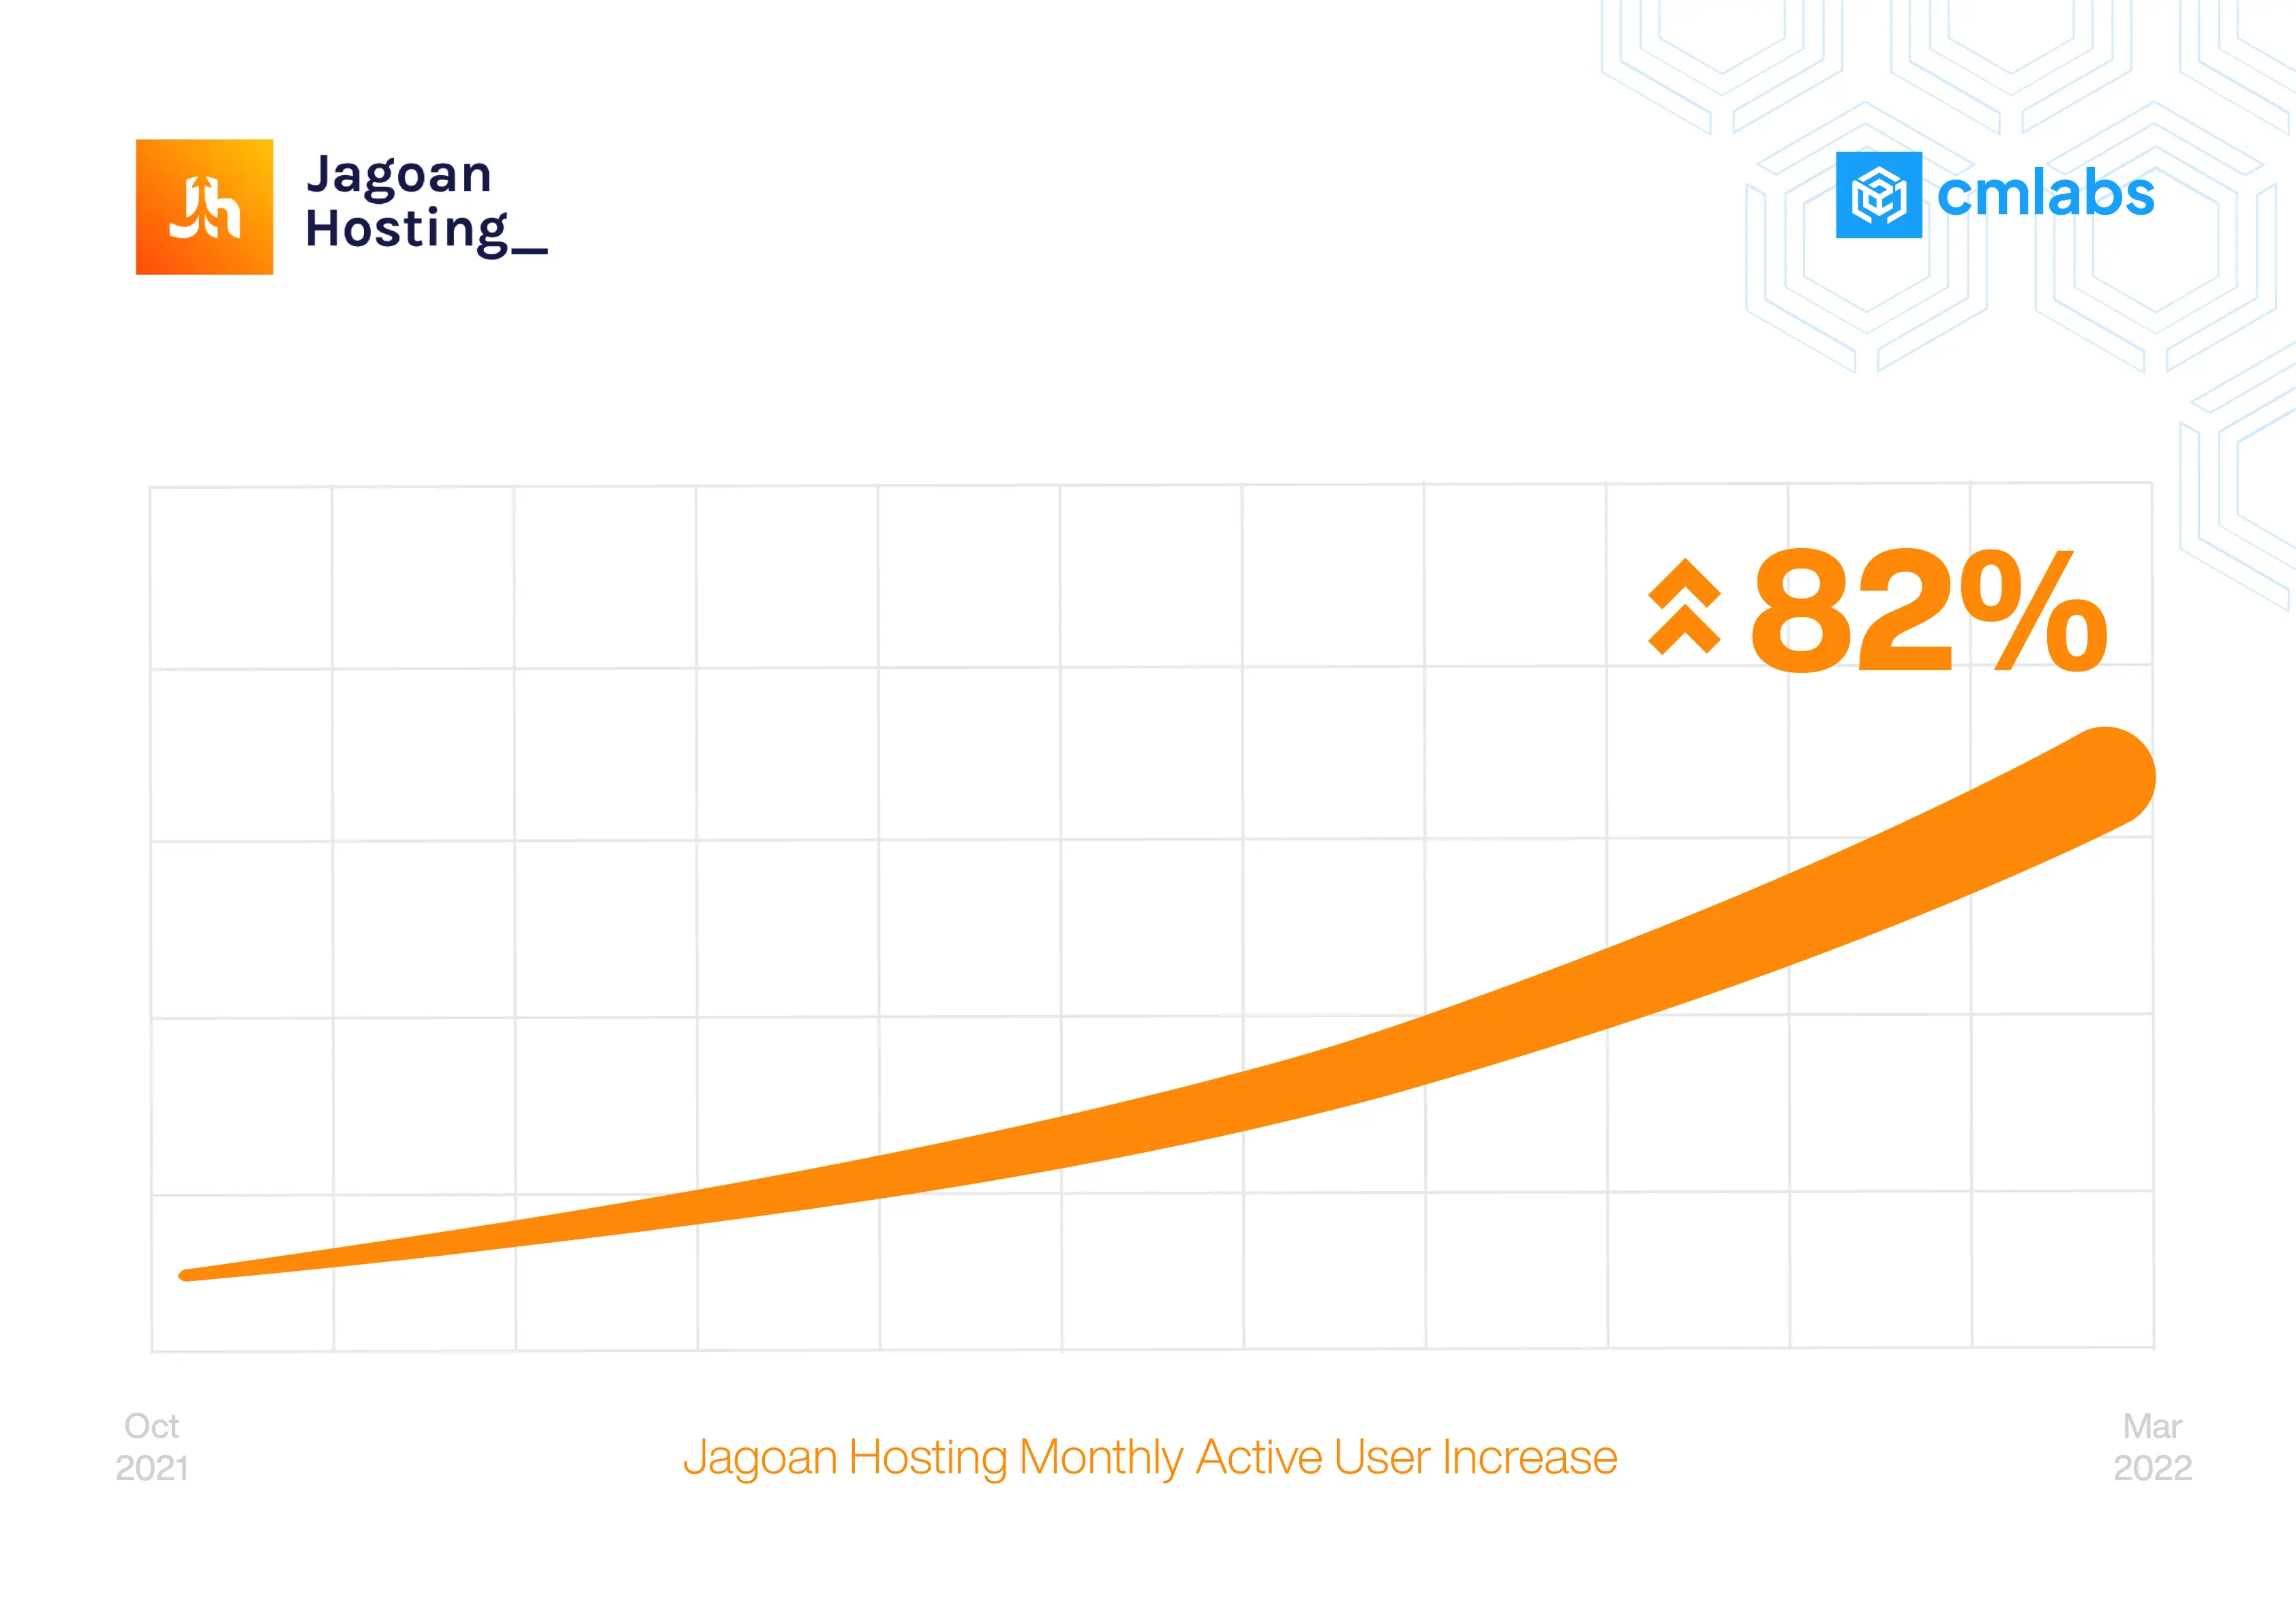 Jagoan Hosting performance overview